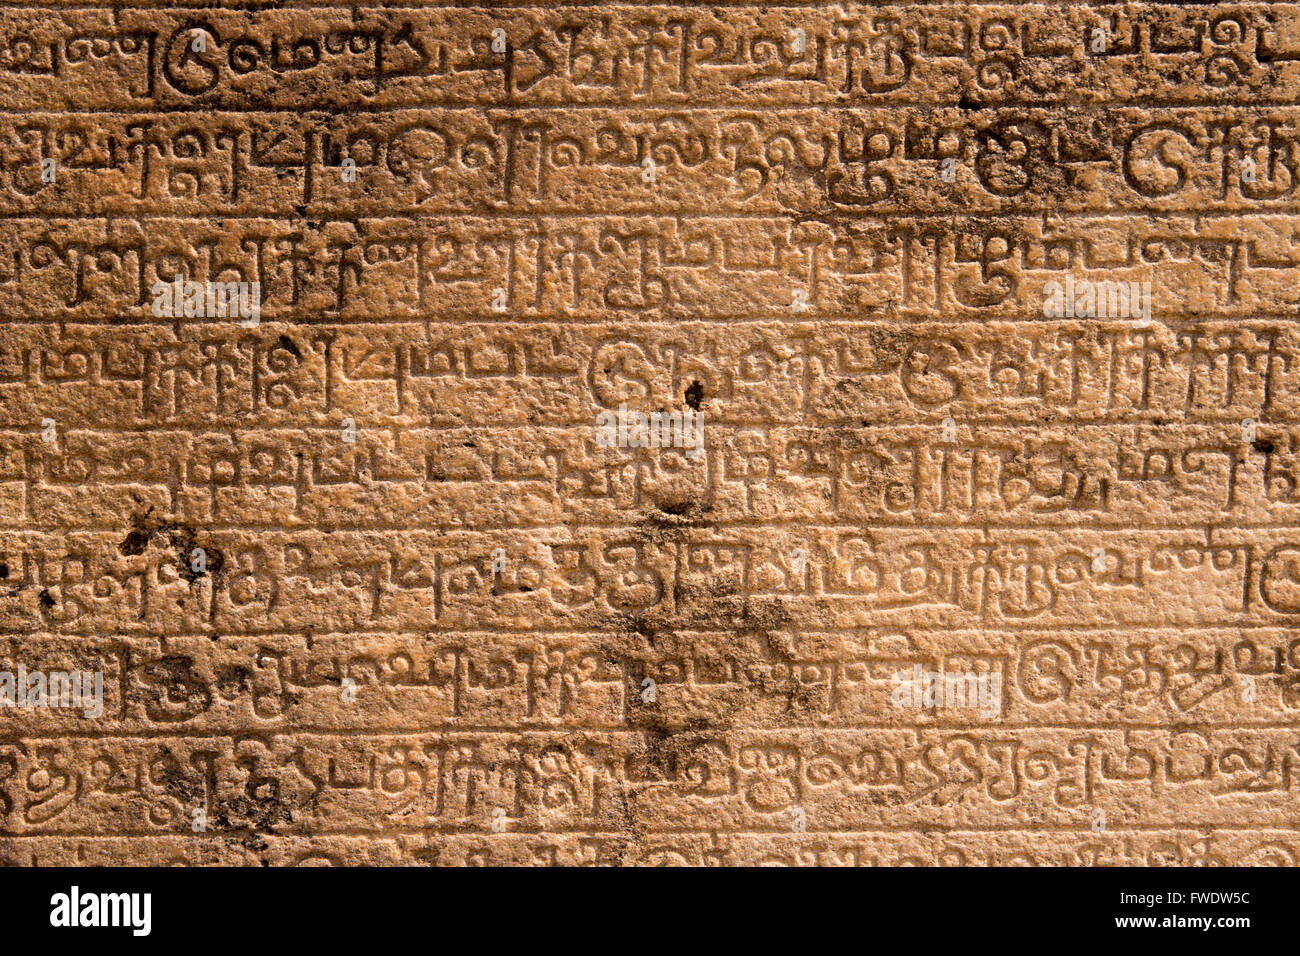 Sri Lanka, Polonnaruwa, Quadrangle, pillar with ancient stone inscription in Sinhalese script Stock Photo